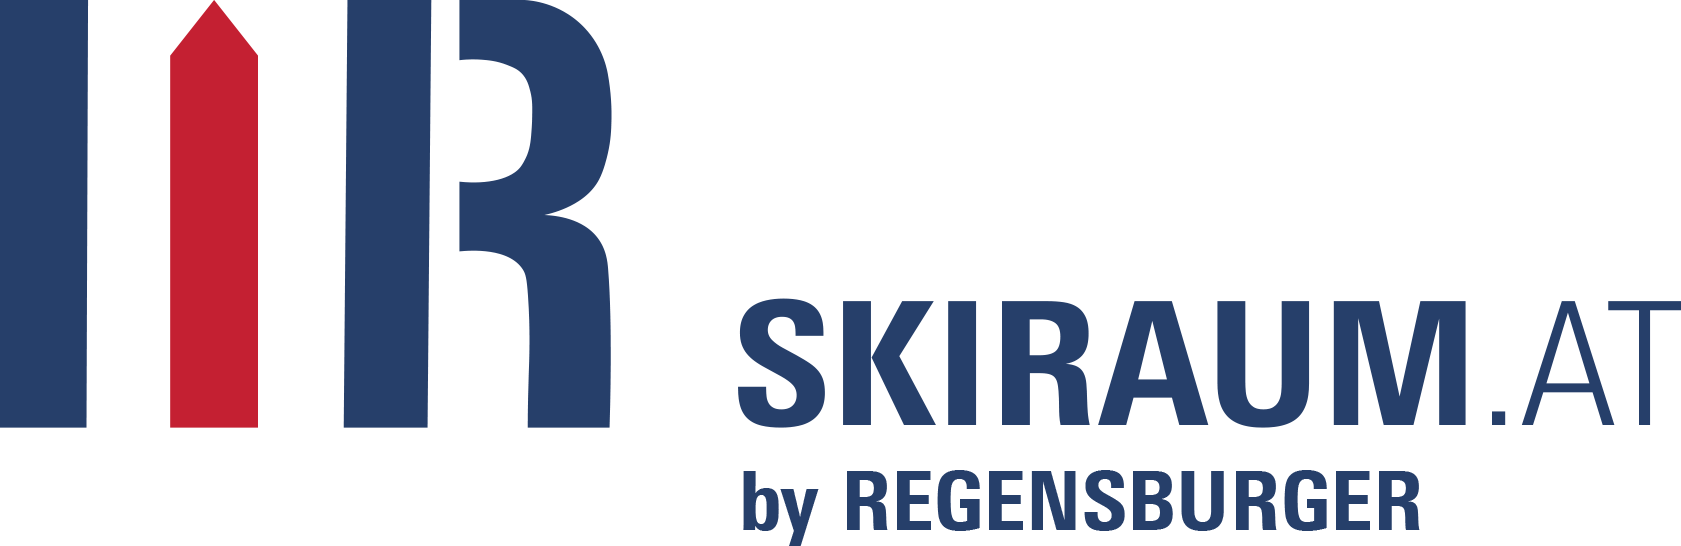 Logo Regensburger Skiraum